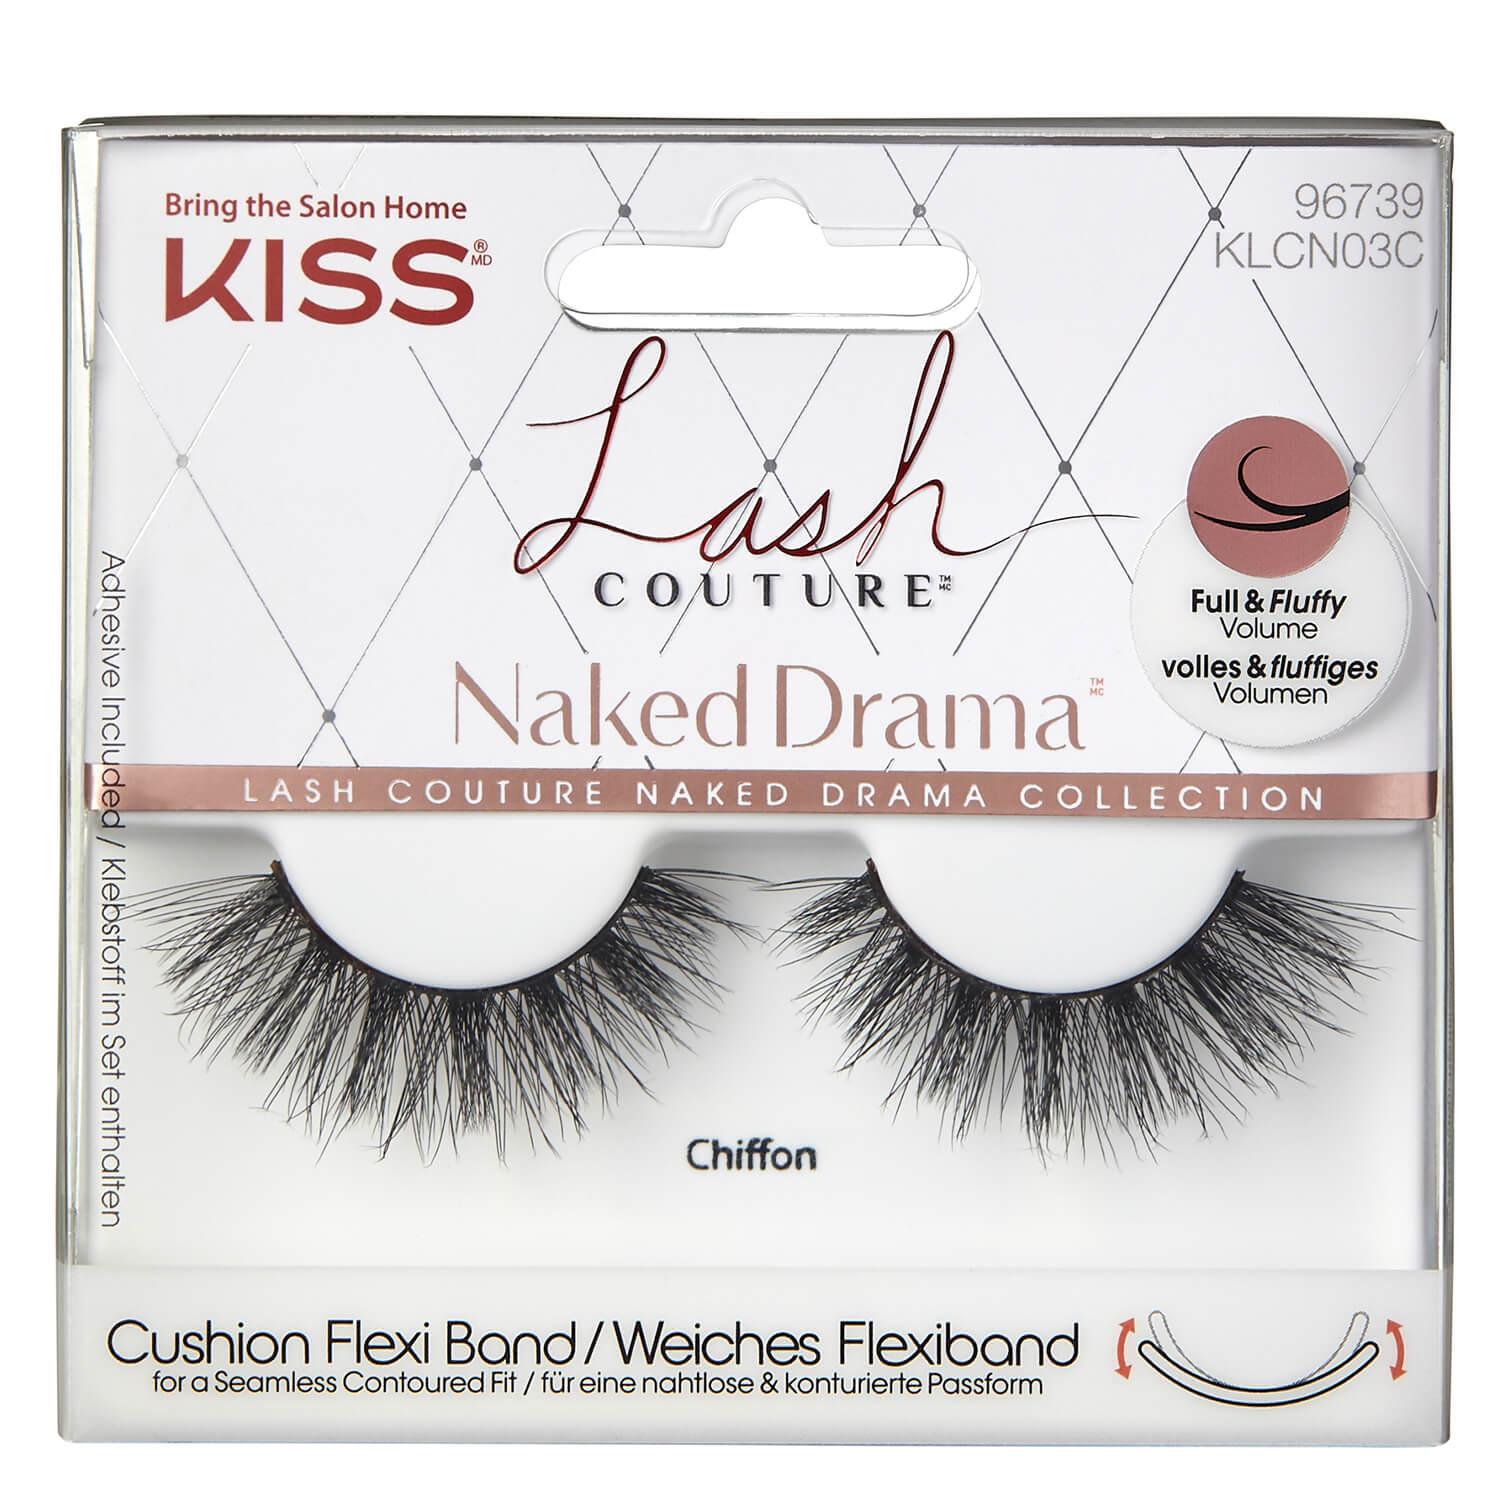 KISS Lashes - Couture Naked Drama Chiffon